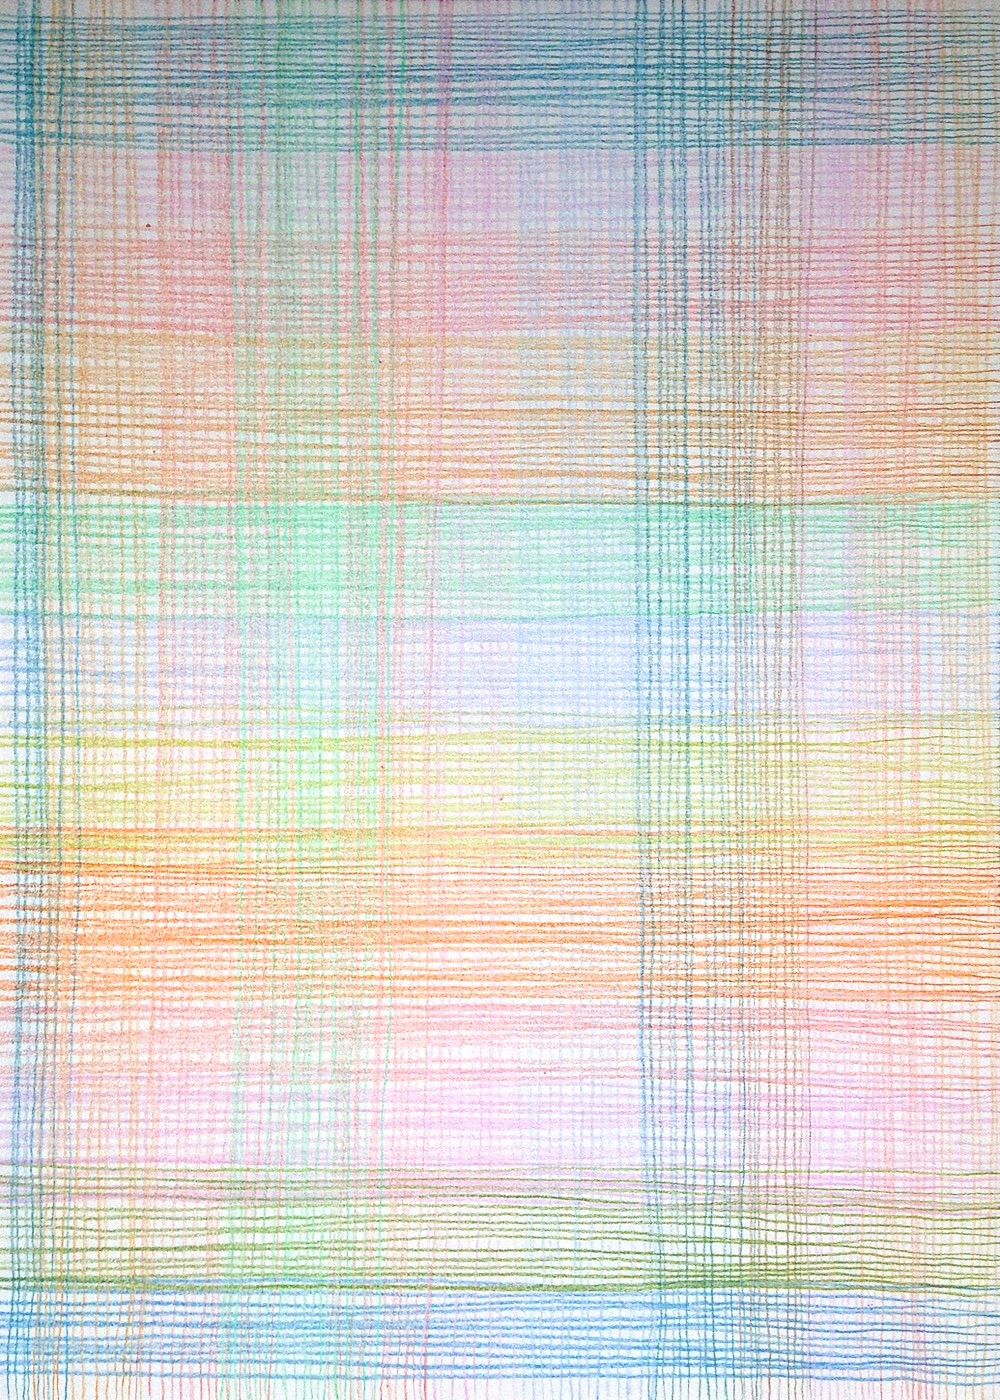 simone hamann_strings_textile_12,7 x 17,7 colorpencil on card 2015